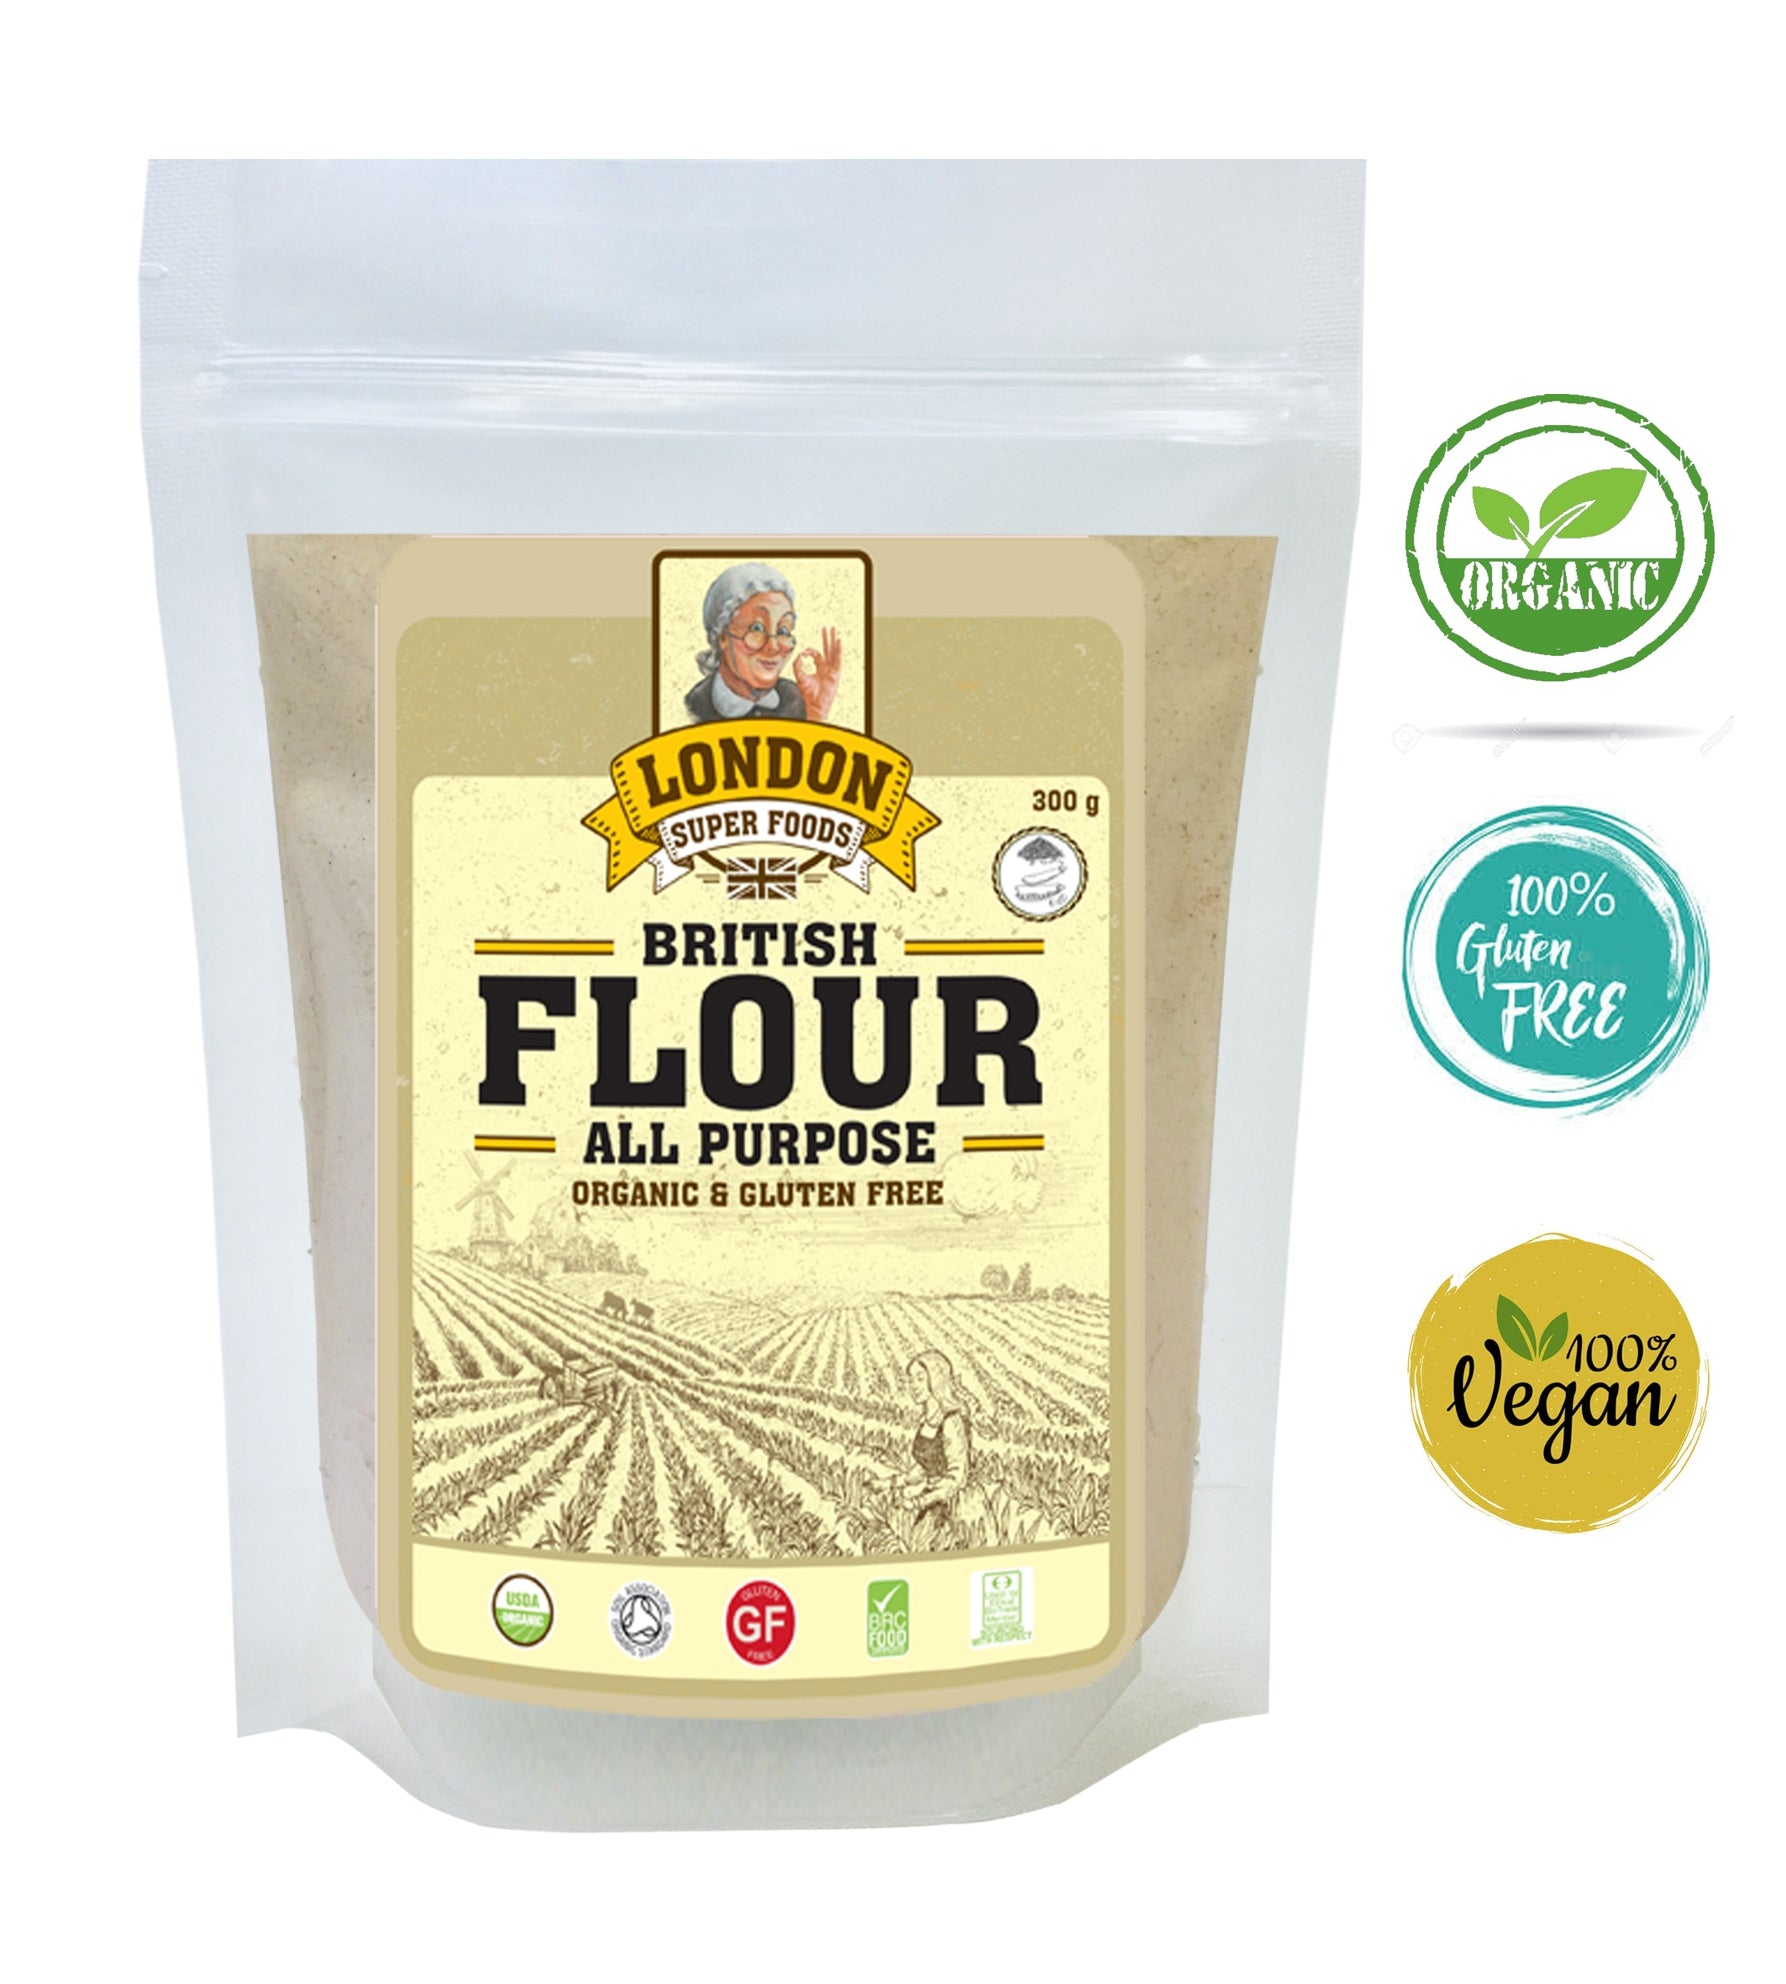 LONDON SUPER FOODS Organic British Flour All Purpose, 300g